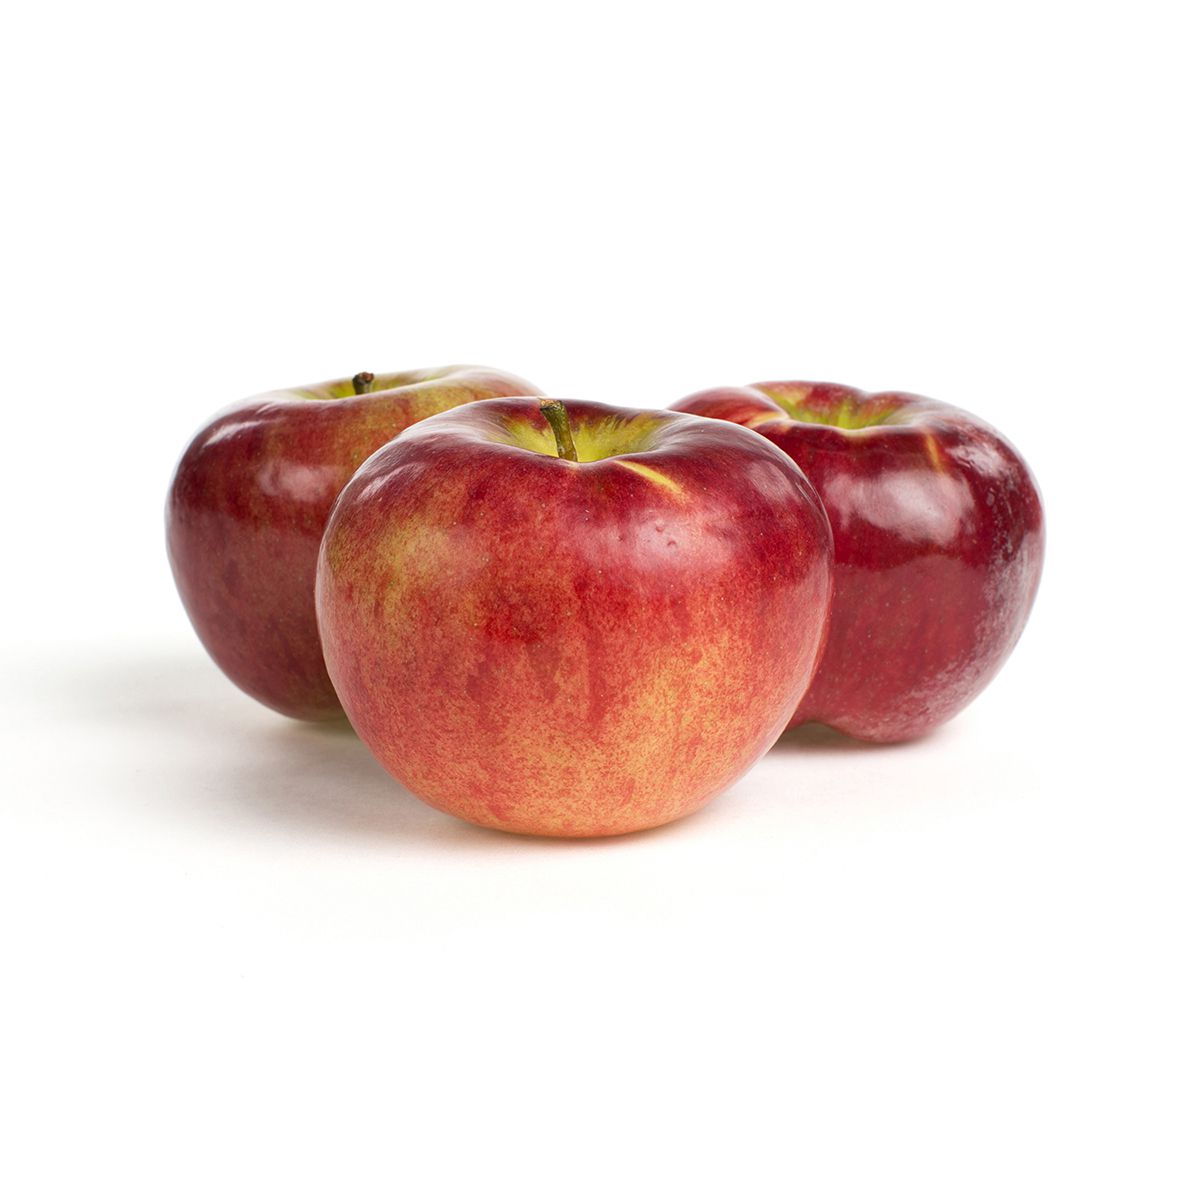 Hudson River Fruit RubyFrost Apples 50-60 Ct